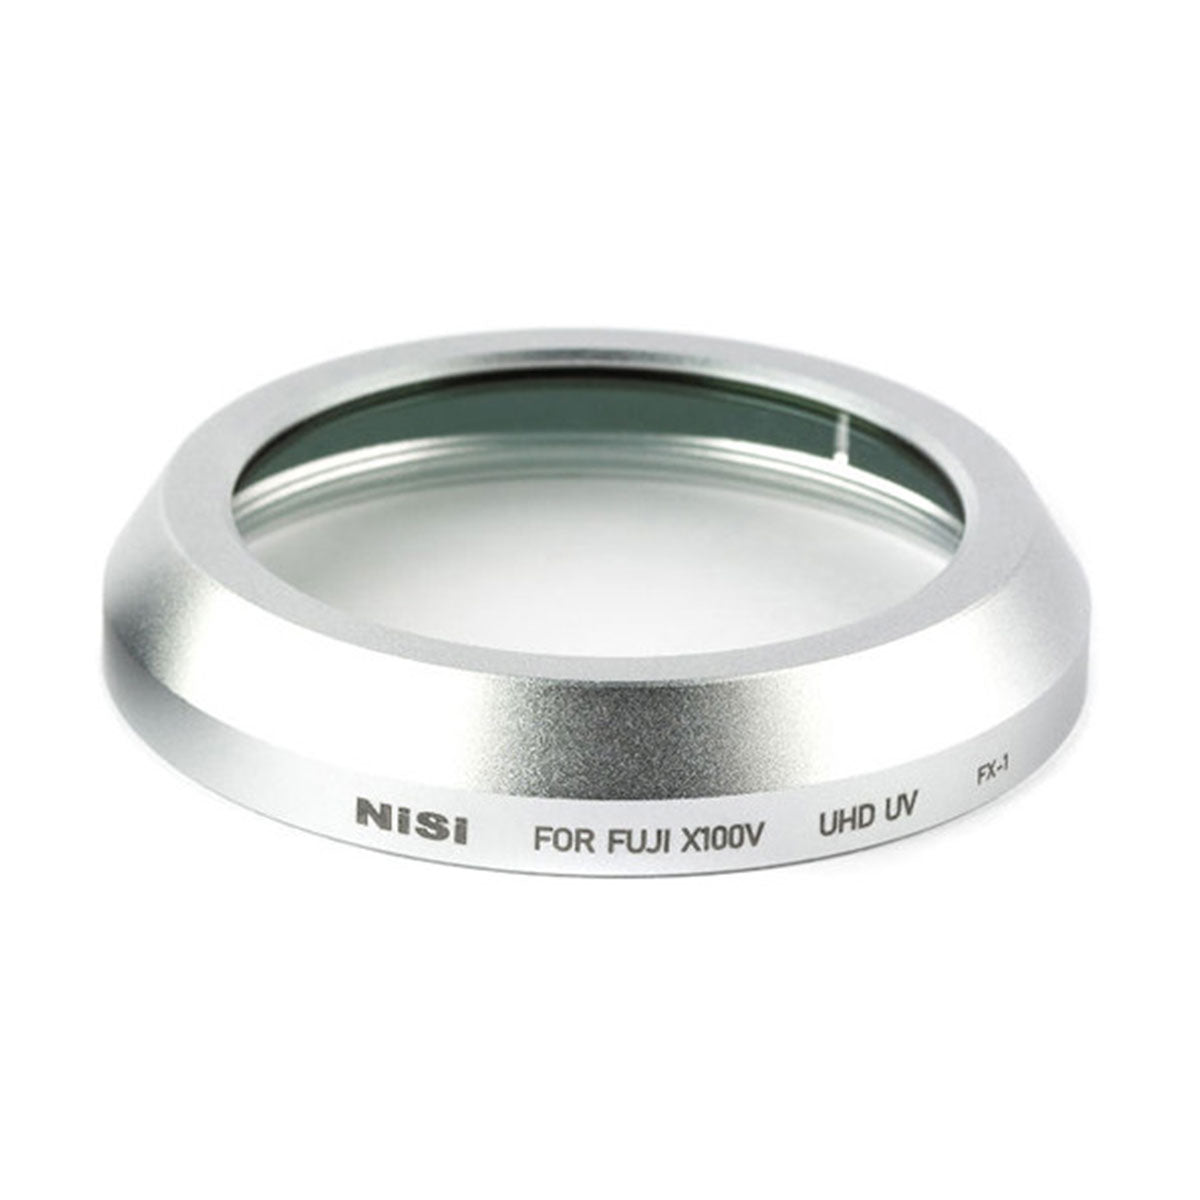 NiSi UHD UV for Fujifilm X100 Series Cameras (Silver)